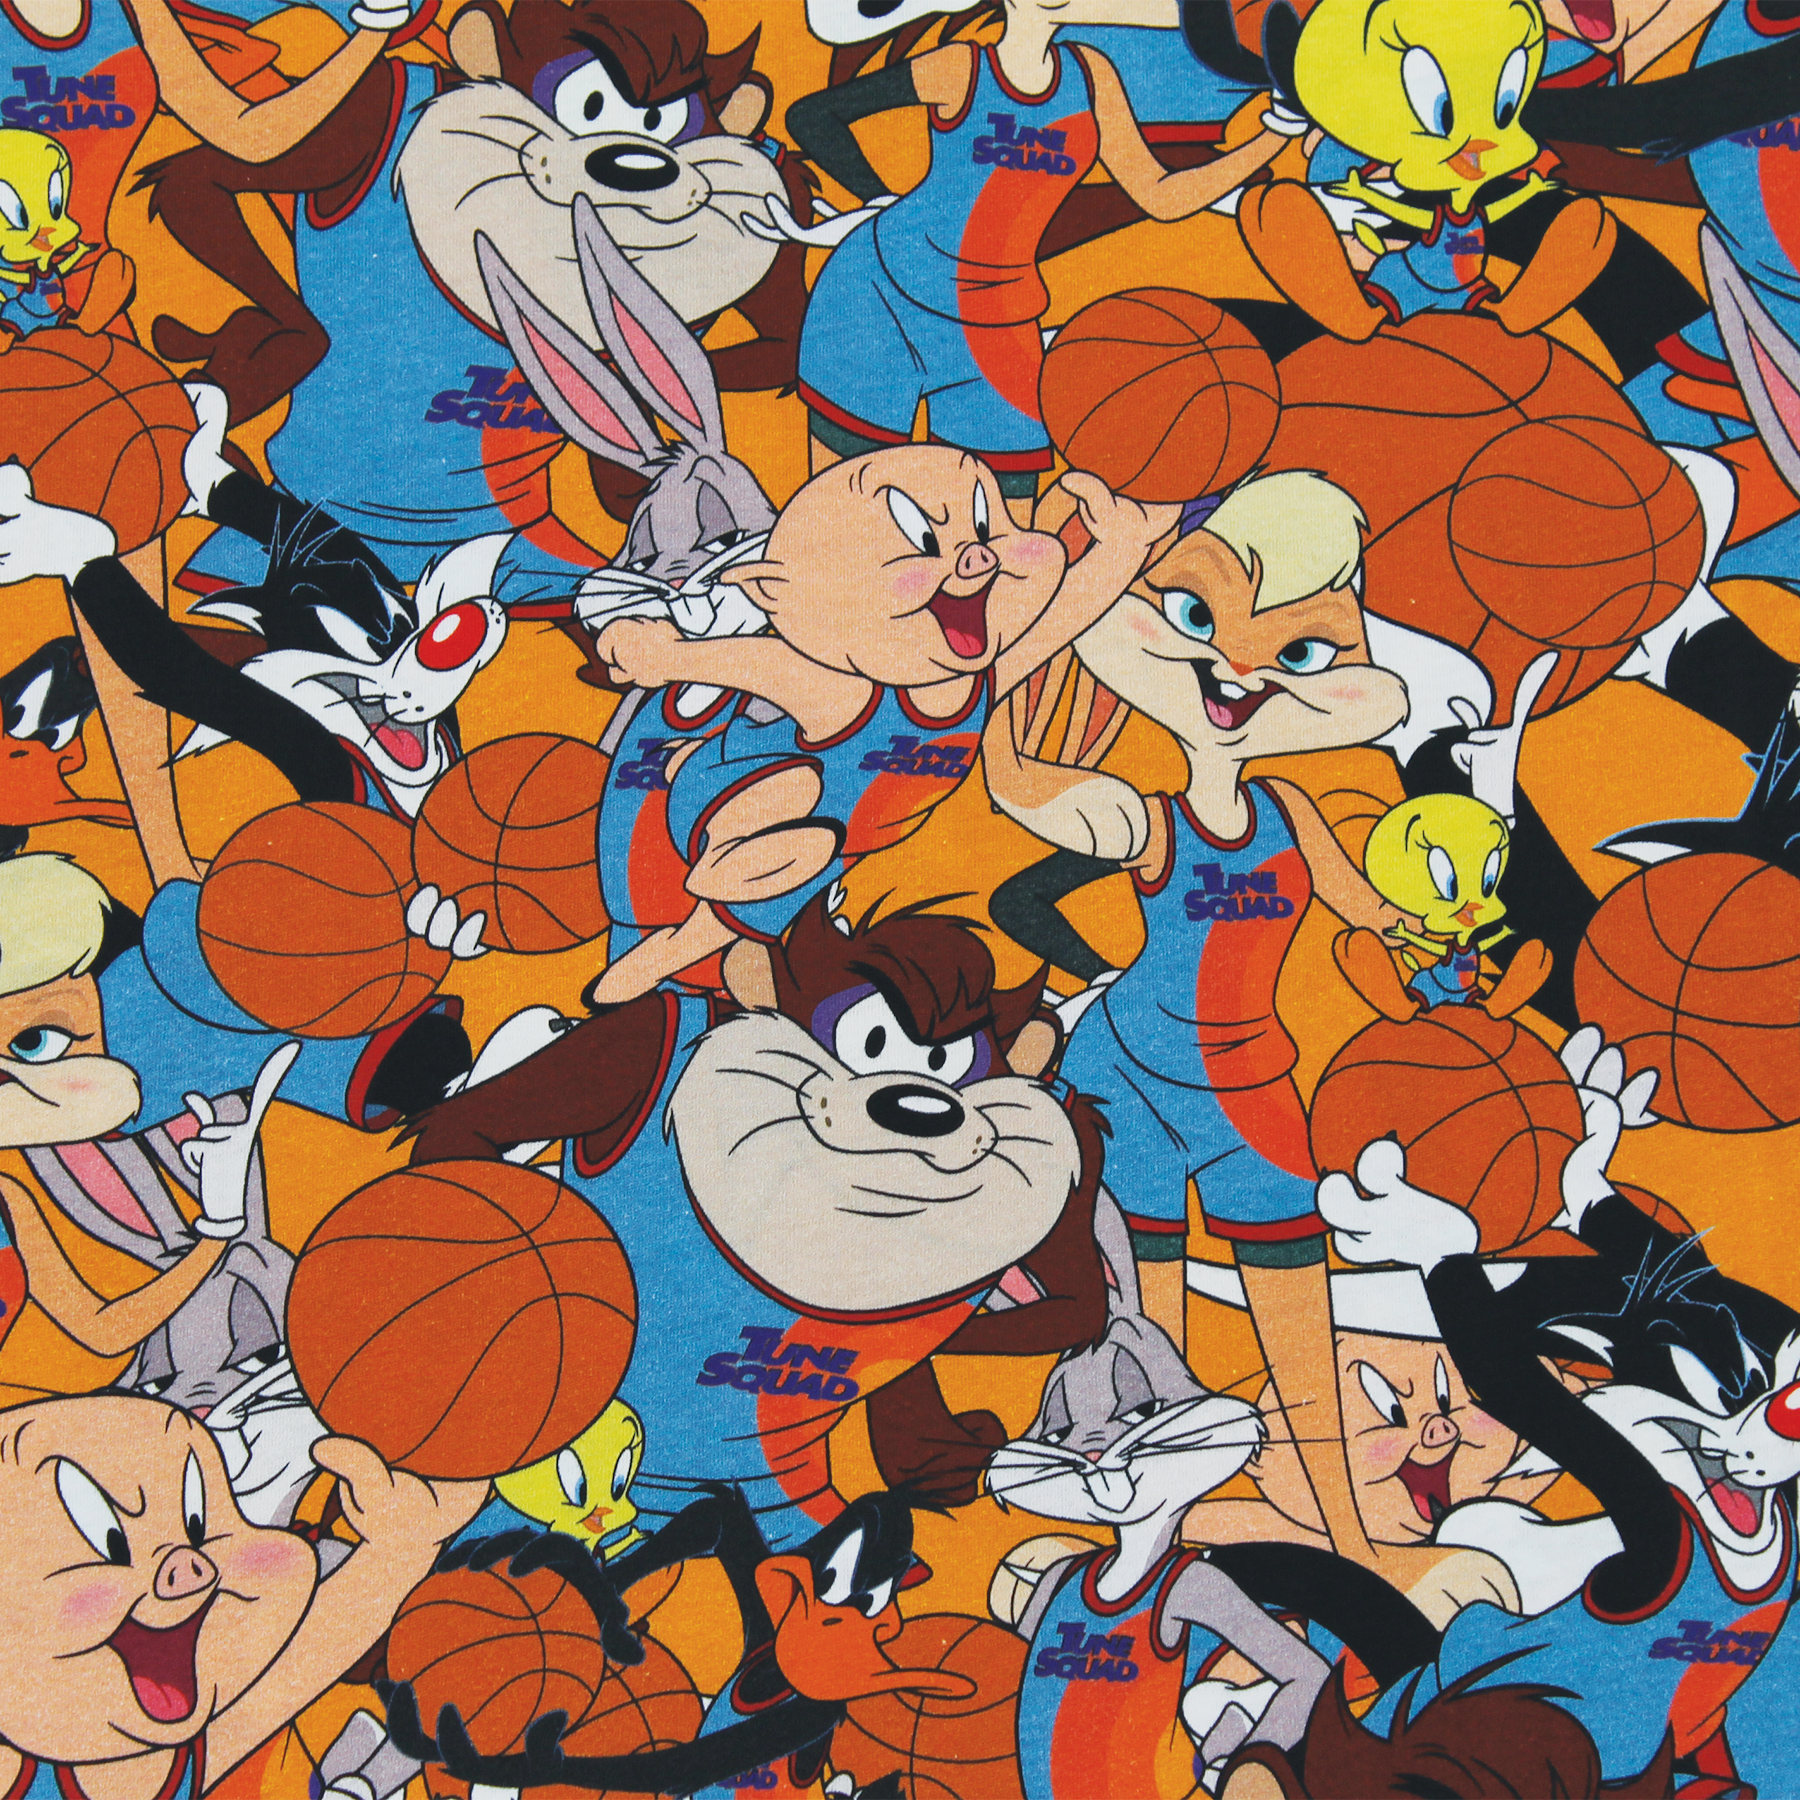 Looney Tunes Shirt Medium 90s Bugs Bunny Taz Space Jam